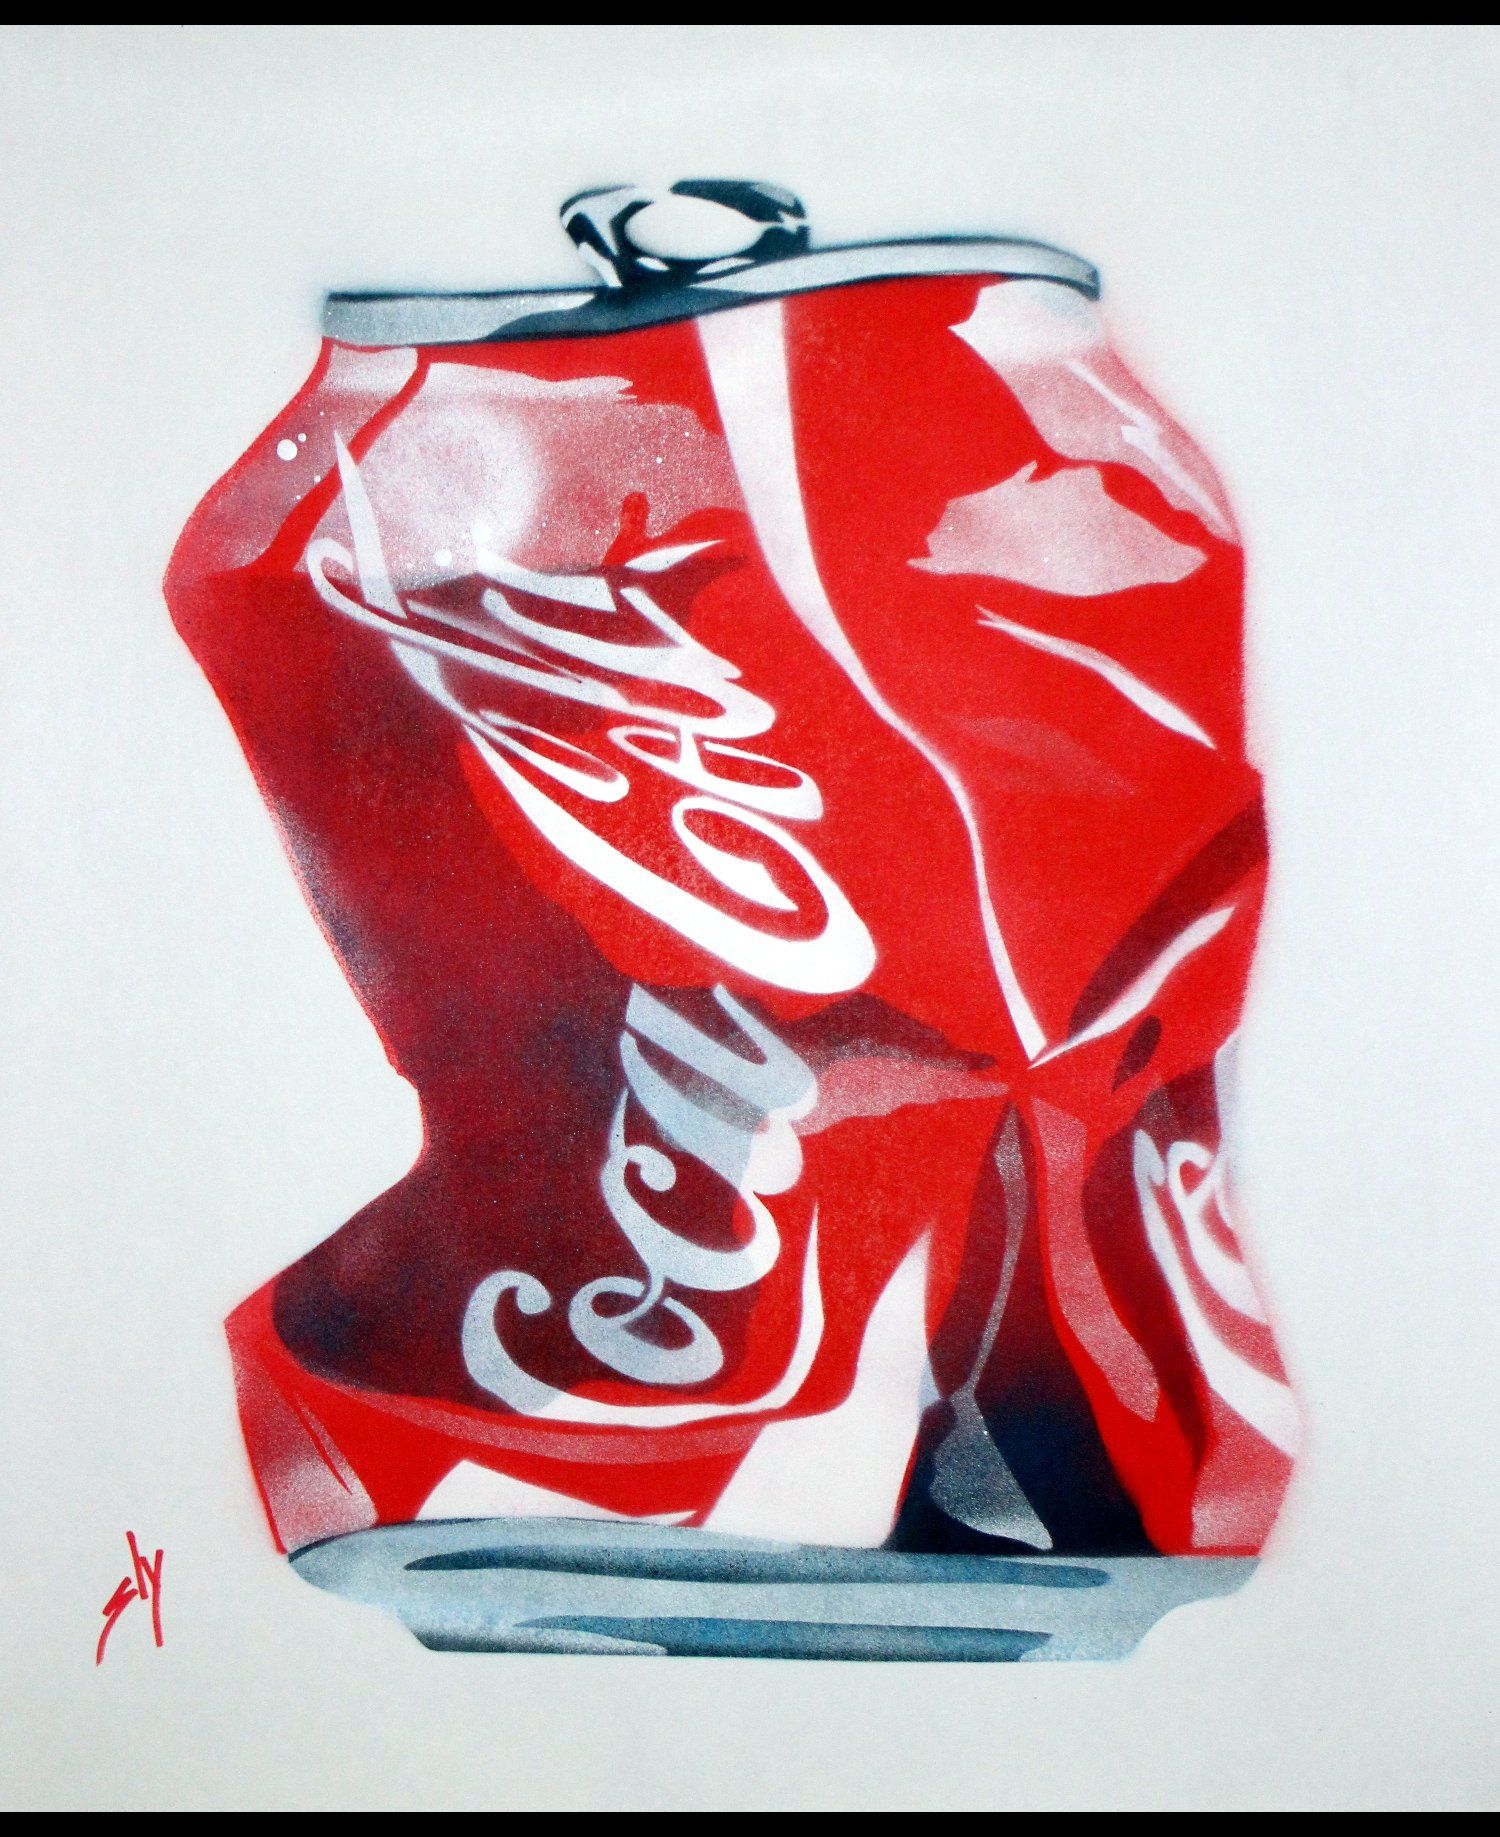 Urban Pop art by Sly -crushed coke